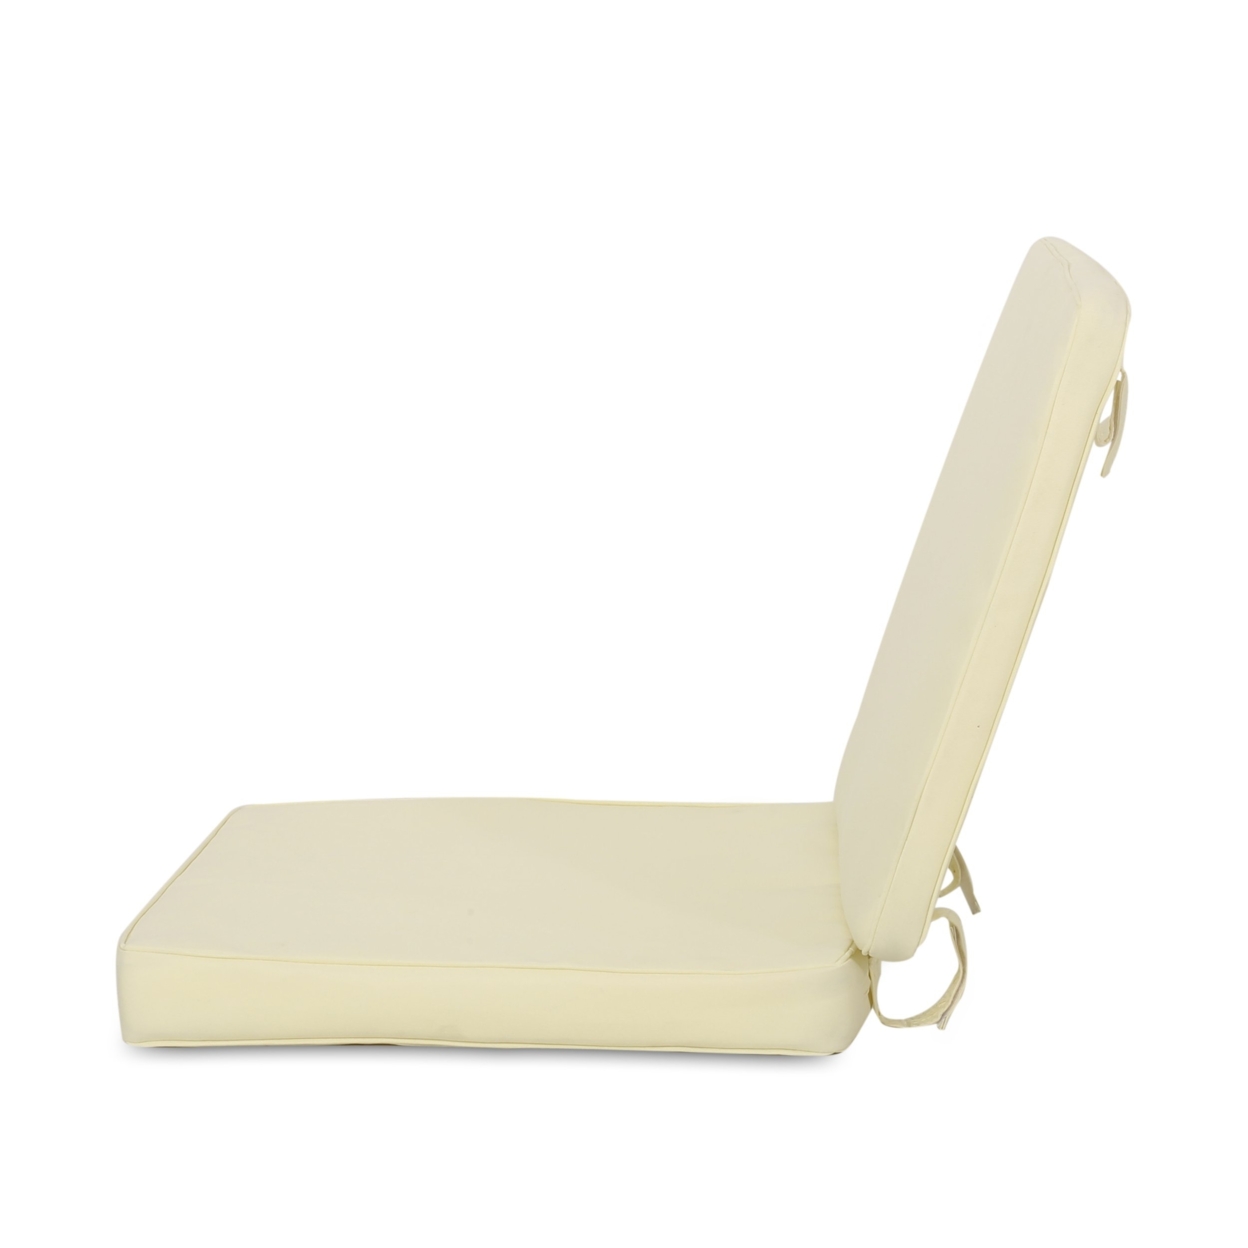 Eydan Outdoor Water Resistant Fabric Club Chair Cushions (Set Of 4) - Cream